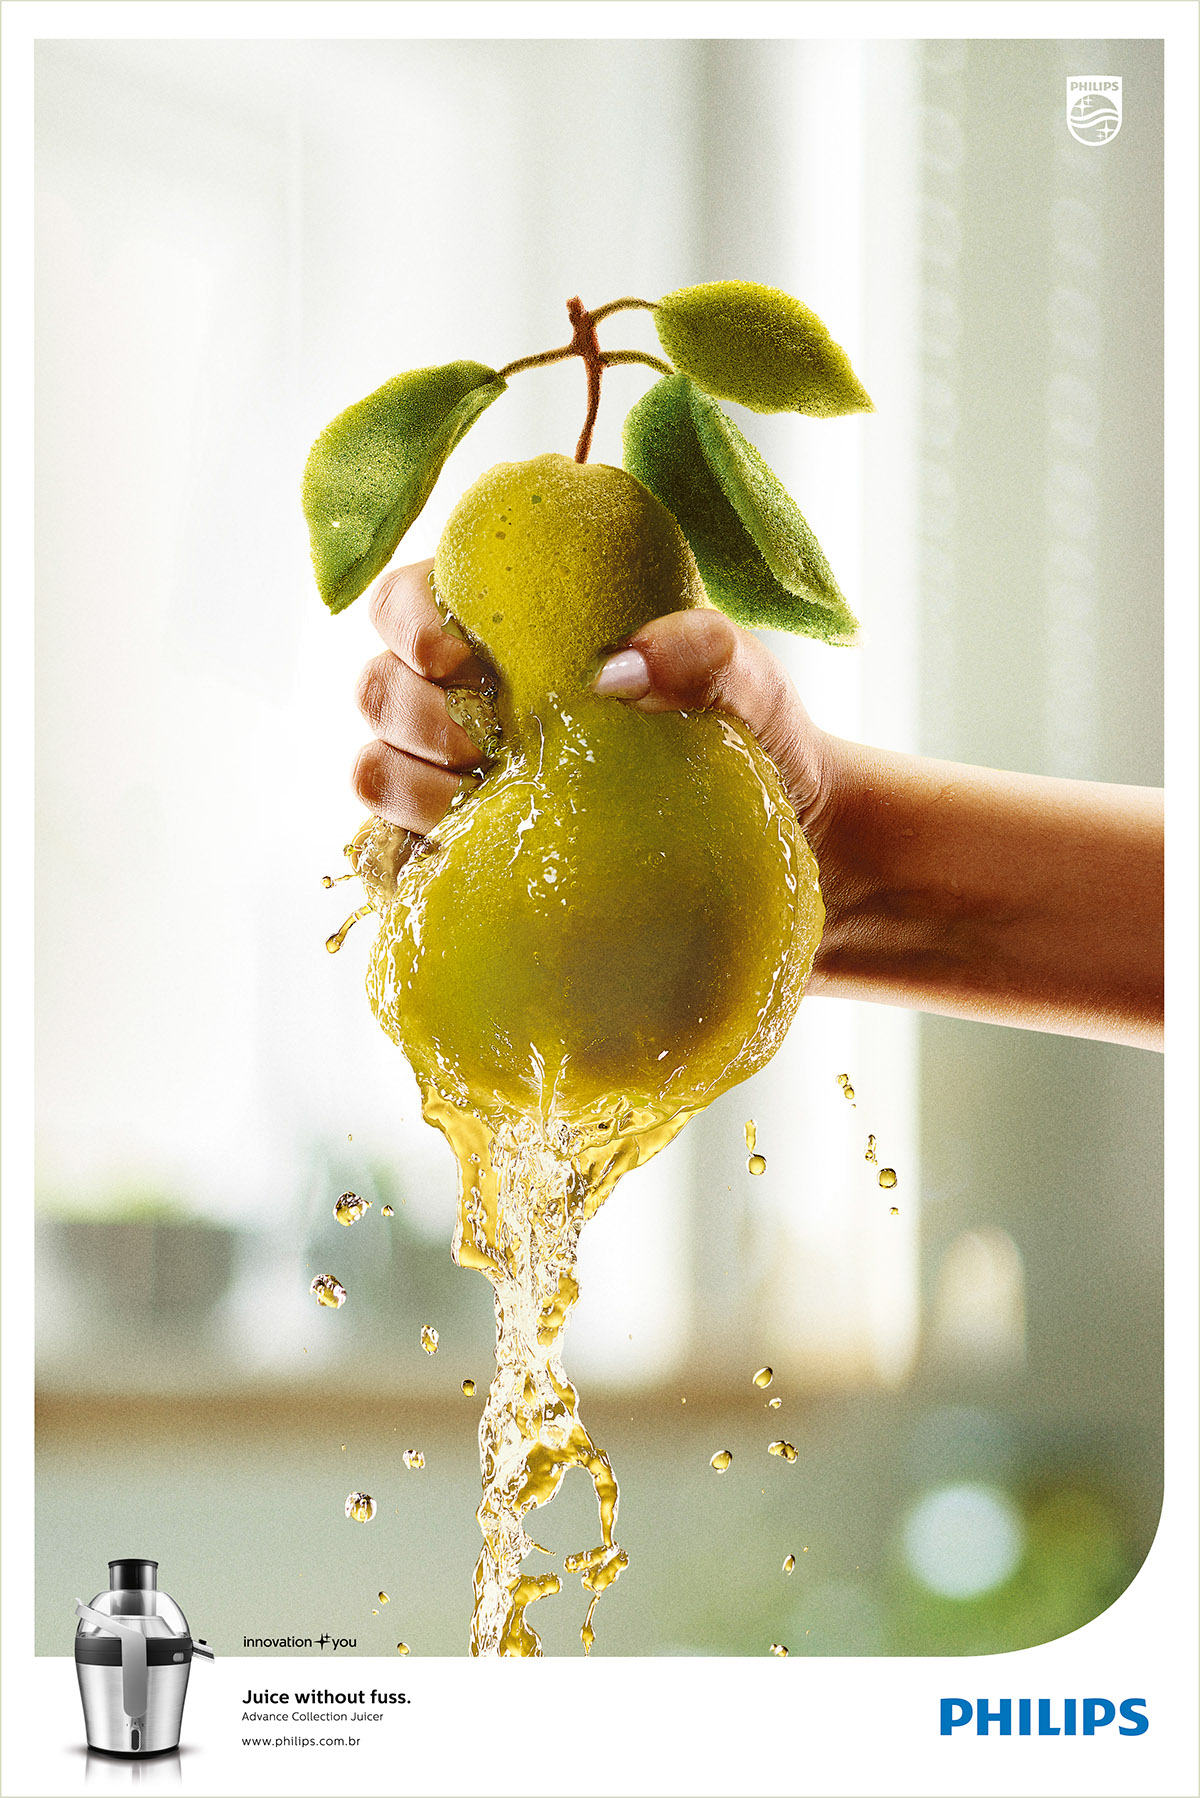 juice Juicer Philips ad poster Sponge Fruit Pineapple